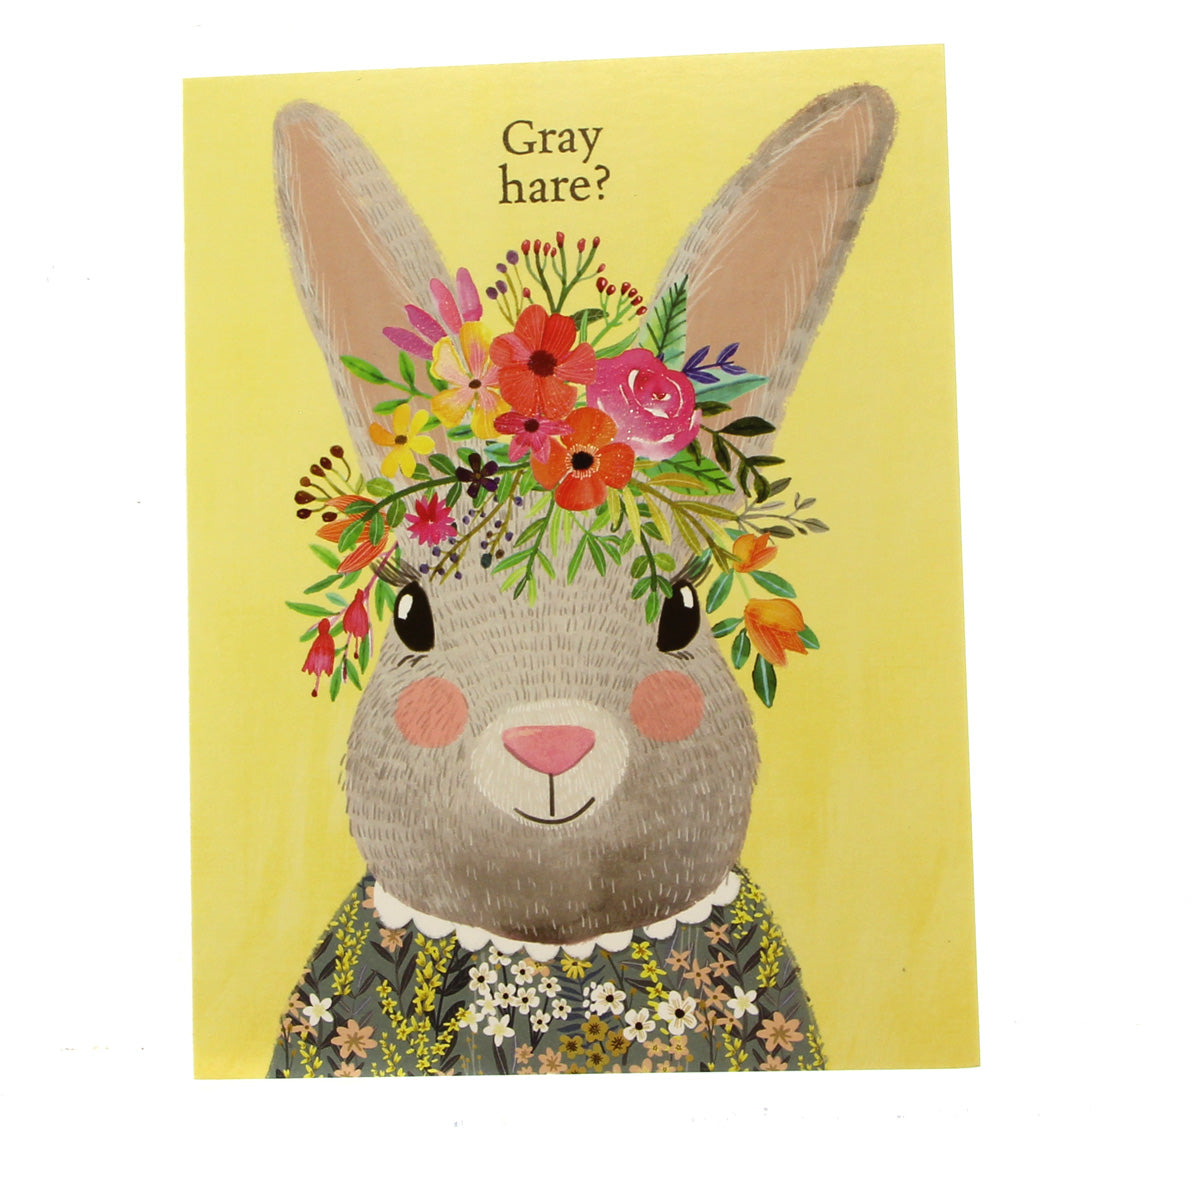 Birthday Card Notions: Gray Hare?